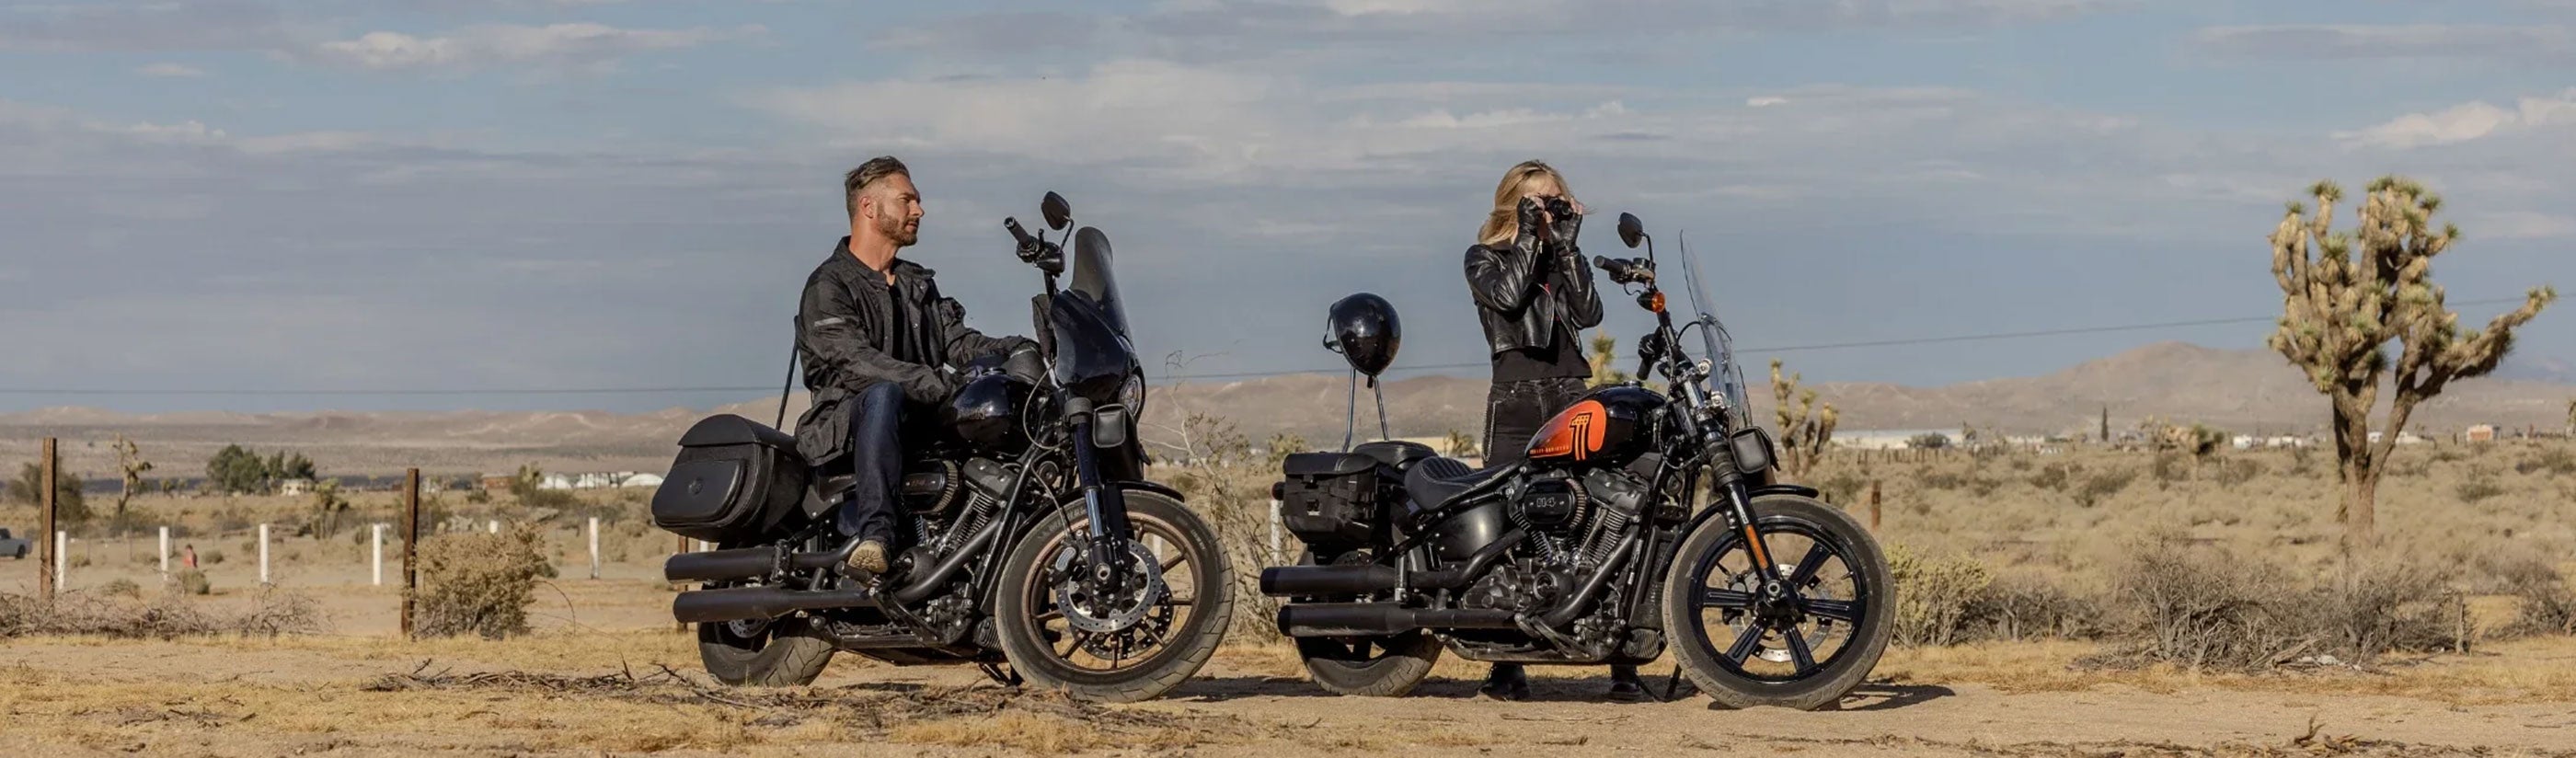 Swingarm Bags for Harley Davidson Motorcycles